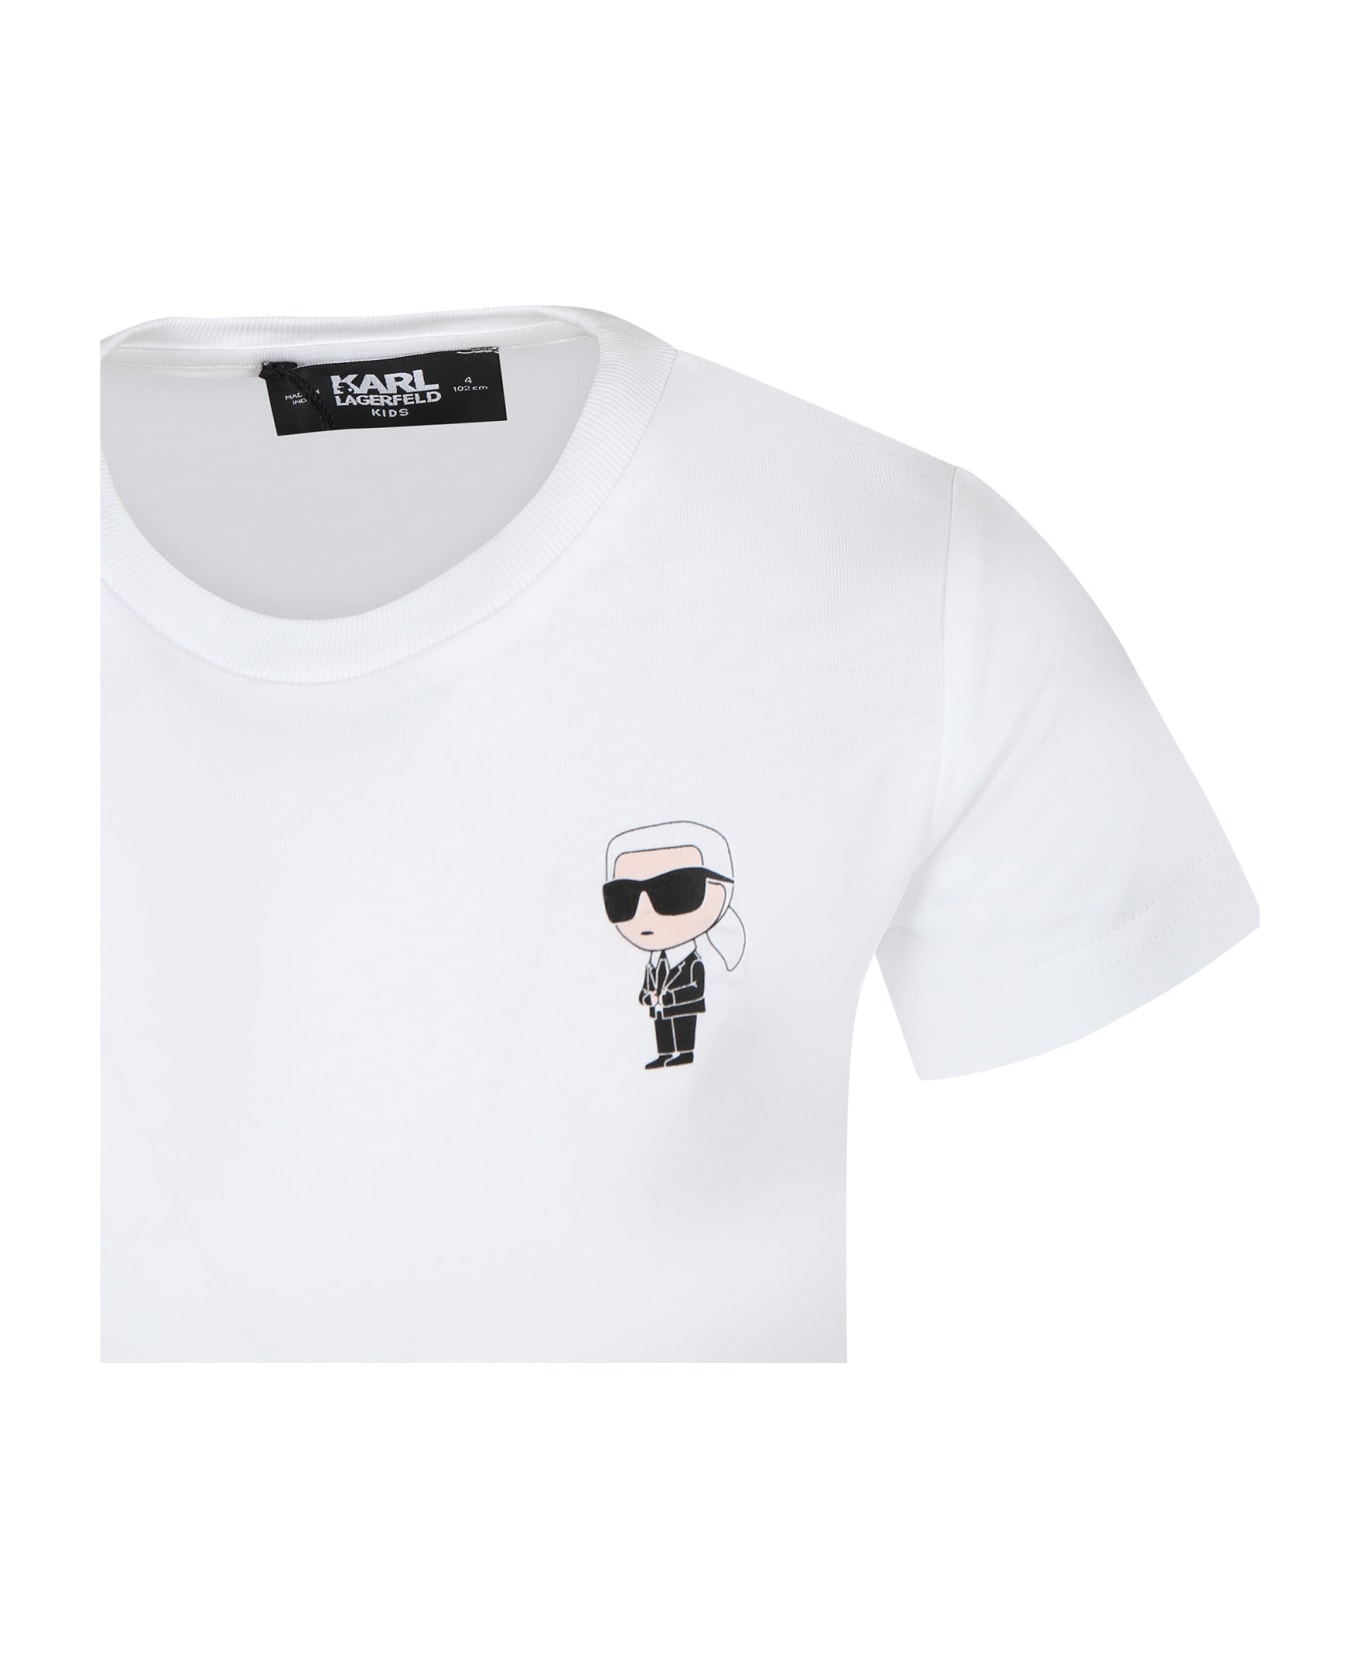 Karl Lagerfeld Kids White T-shirt For Boy With Karl Print - White